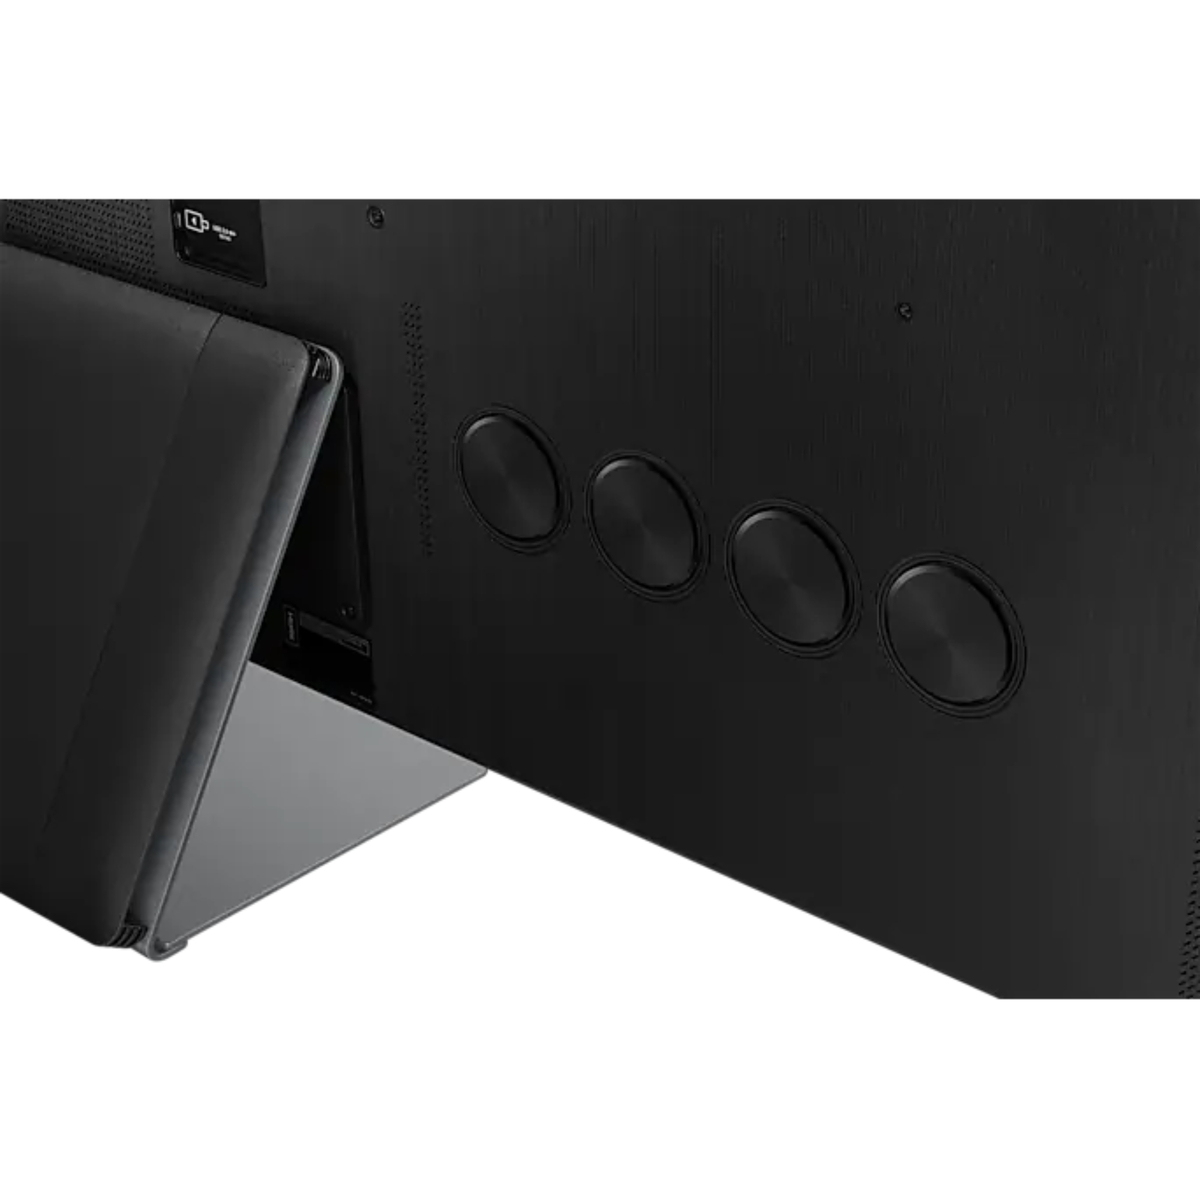 Samsung 65 Inches Neo QLED 8K Smart TV, Black, QA65QN700CUXZN